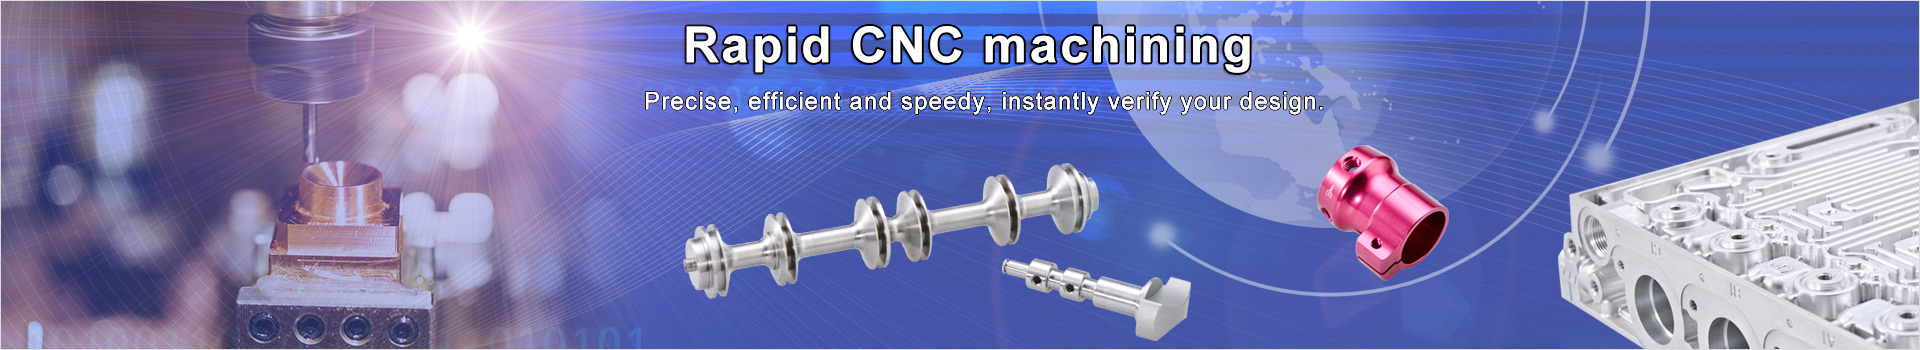 Rapid CNC machining|Rapid CNC machining services|CNC machining service|CNC machining prototyping|Rapid CNC machining prototyping